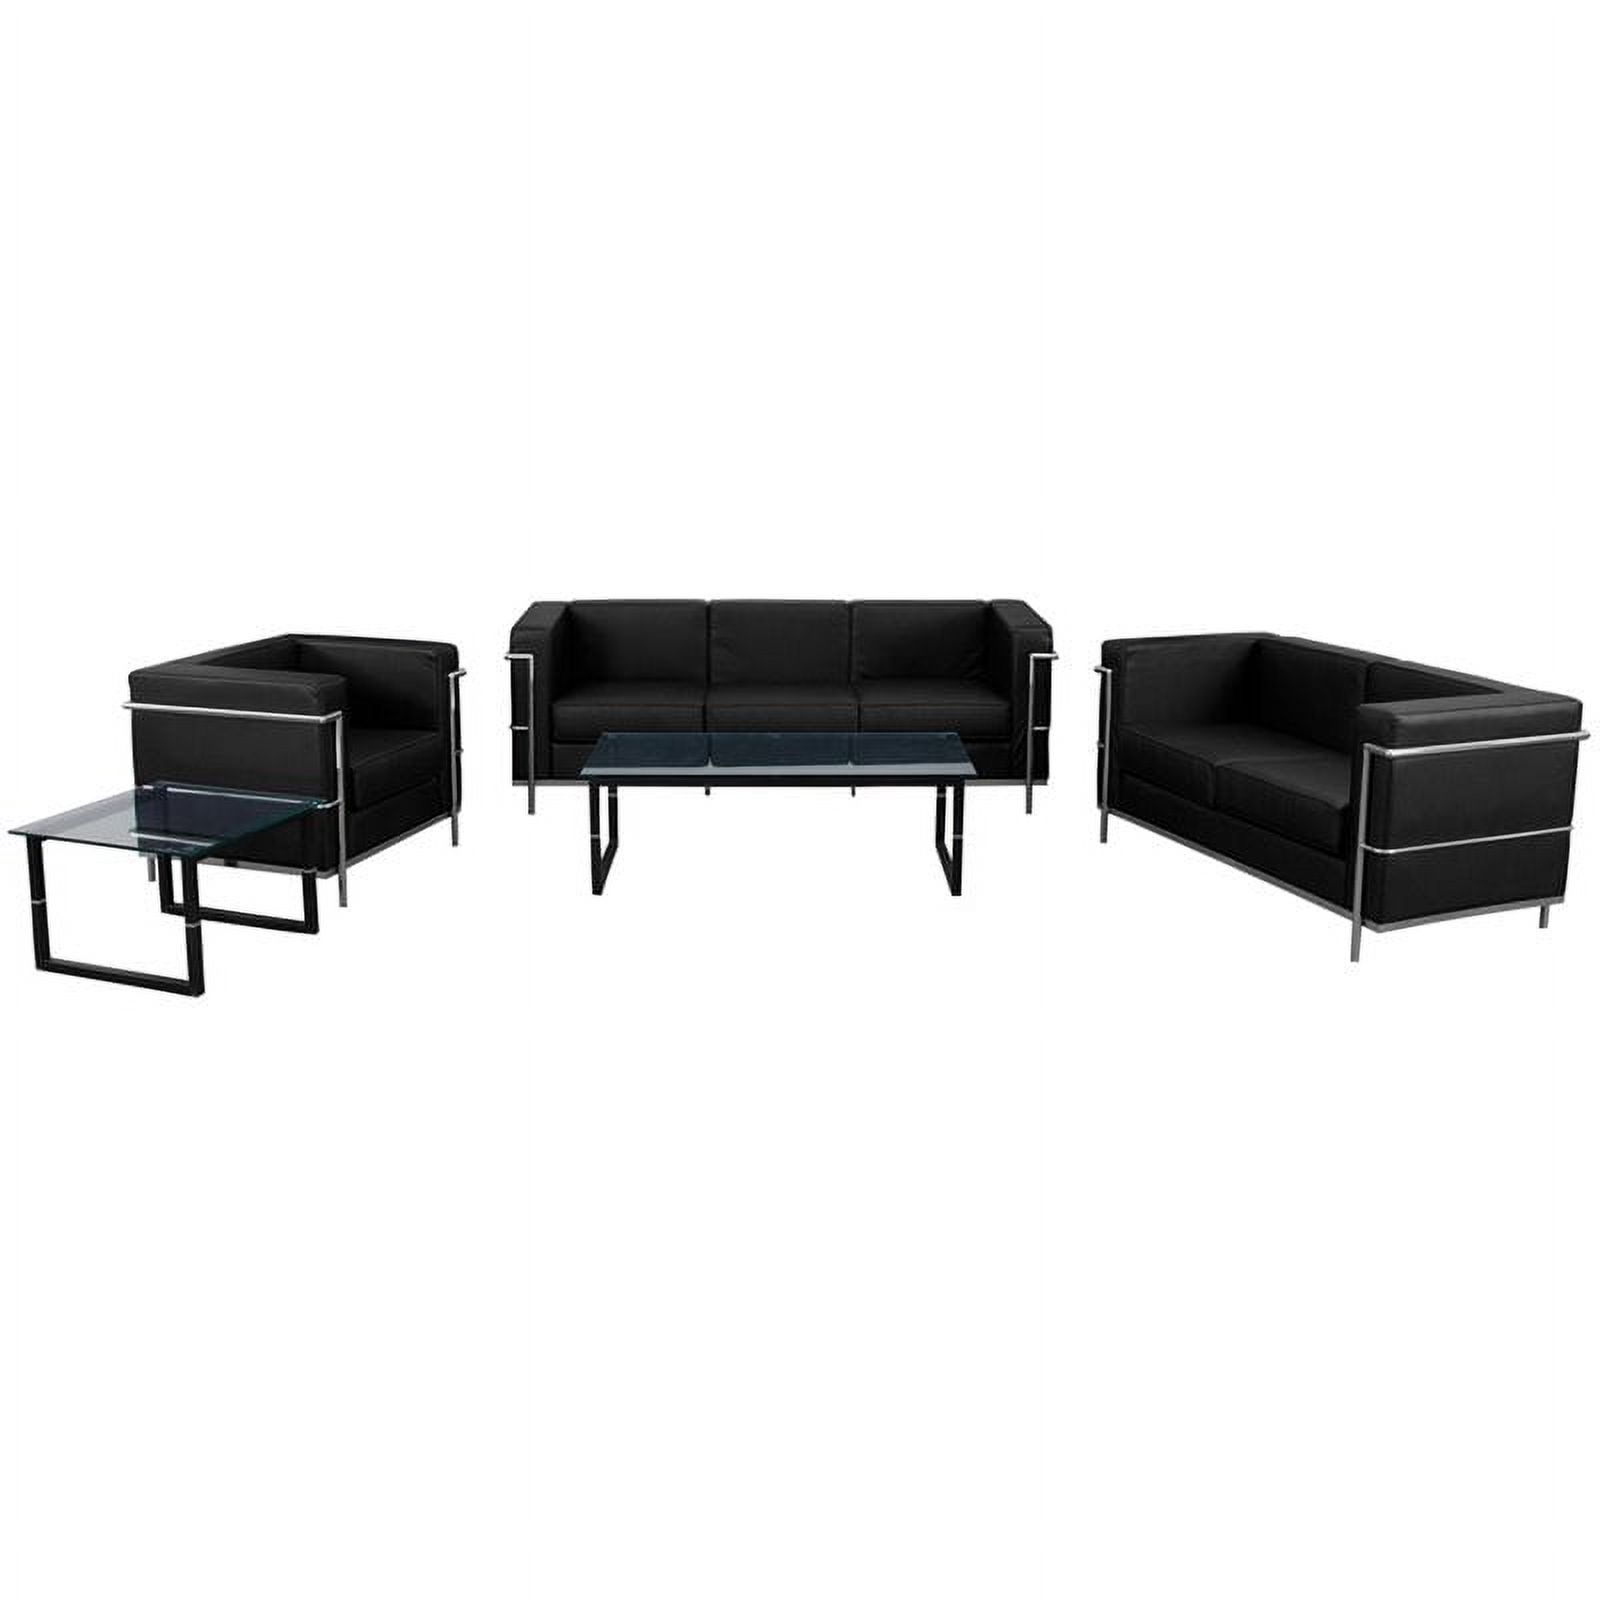 Flash Furniture Hercules Regal Series Reception Set in Black - image 1 of 5